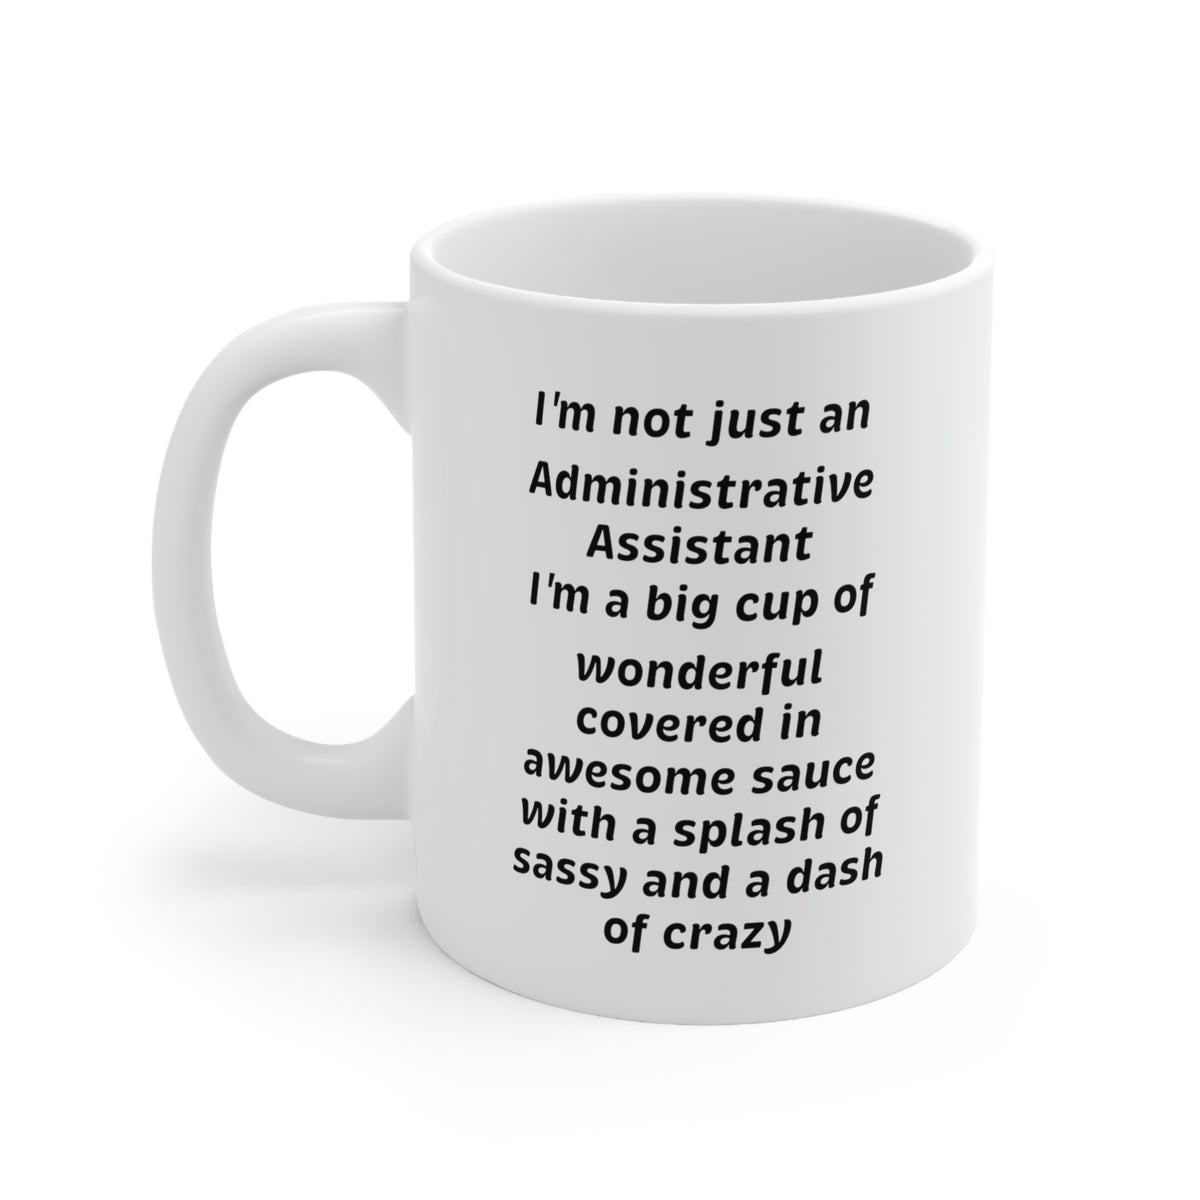 Administrative Assistant Coffee Mug - I'm not just an Administrative Assistant - Unique Gag Gifts For Admin